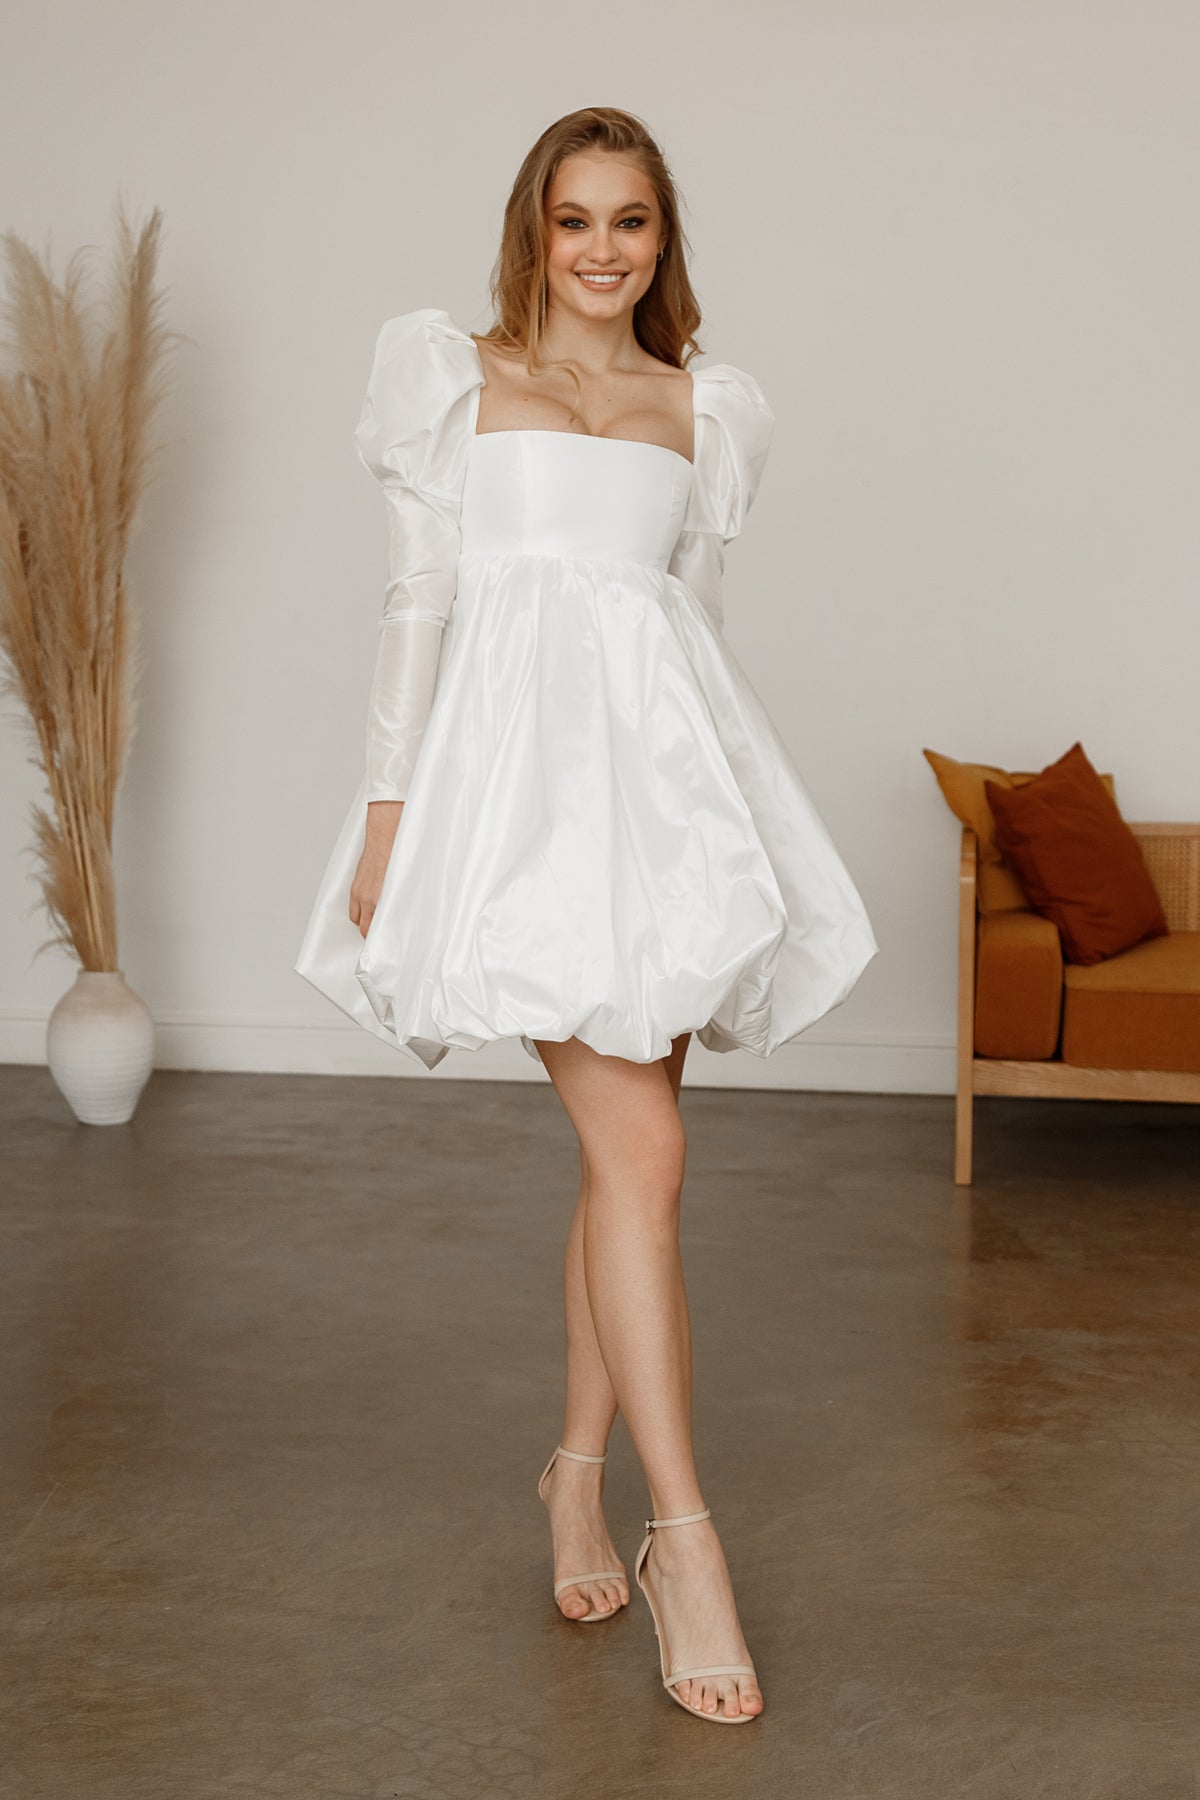 Olivia Bottega Mariell Wedding Dress